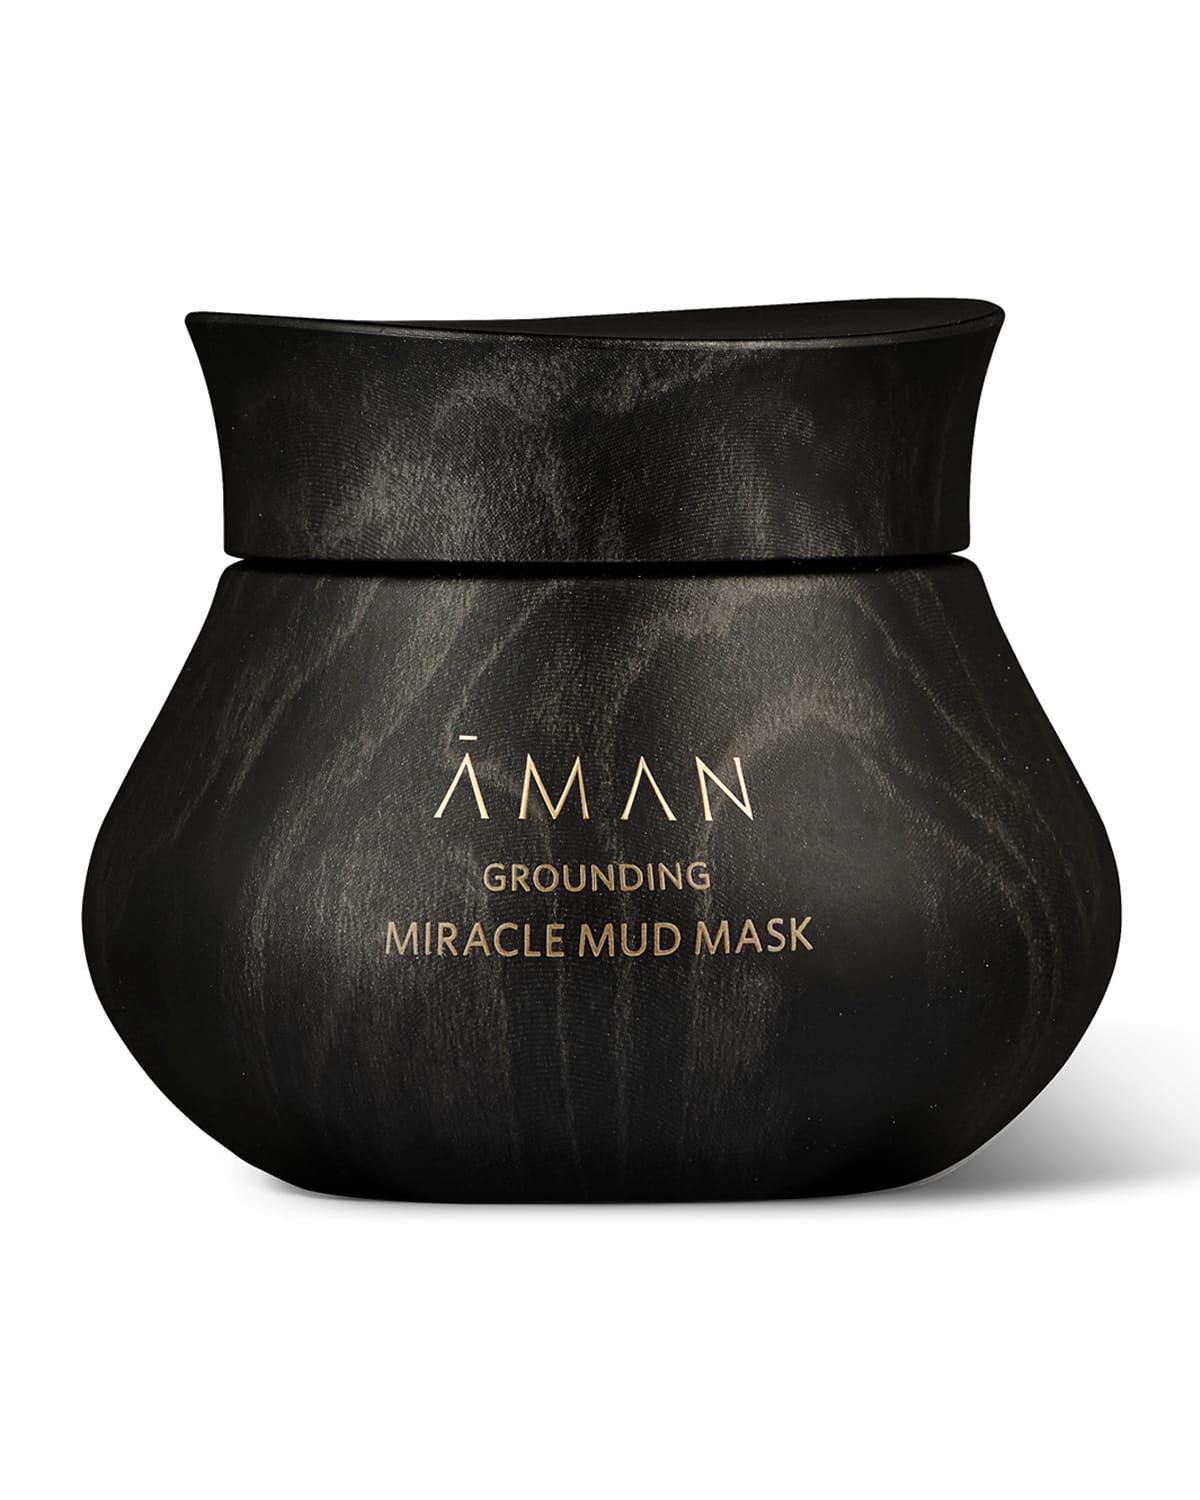 Aman Grounding Miracle Mud Mask, 1.7 oz.